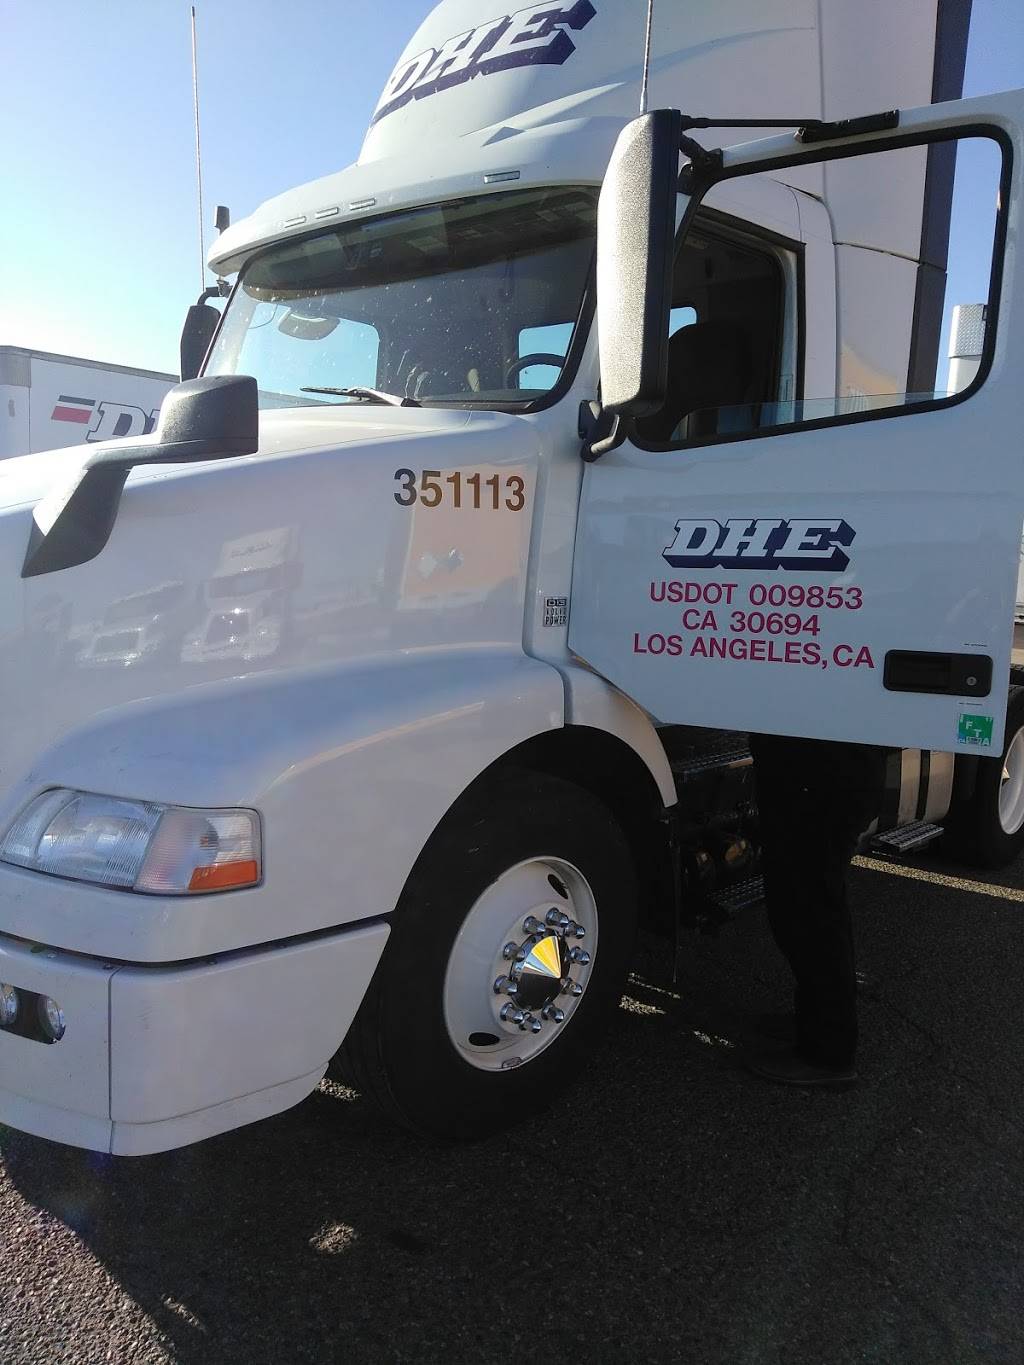 DHE - Dependable Highway Express | 2440 S 48th Ave, Phoenix, AZ 85043, USA | Phone: (602) 278-4401